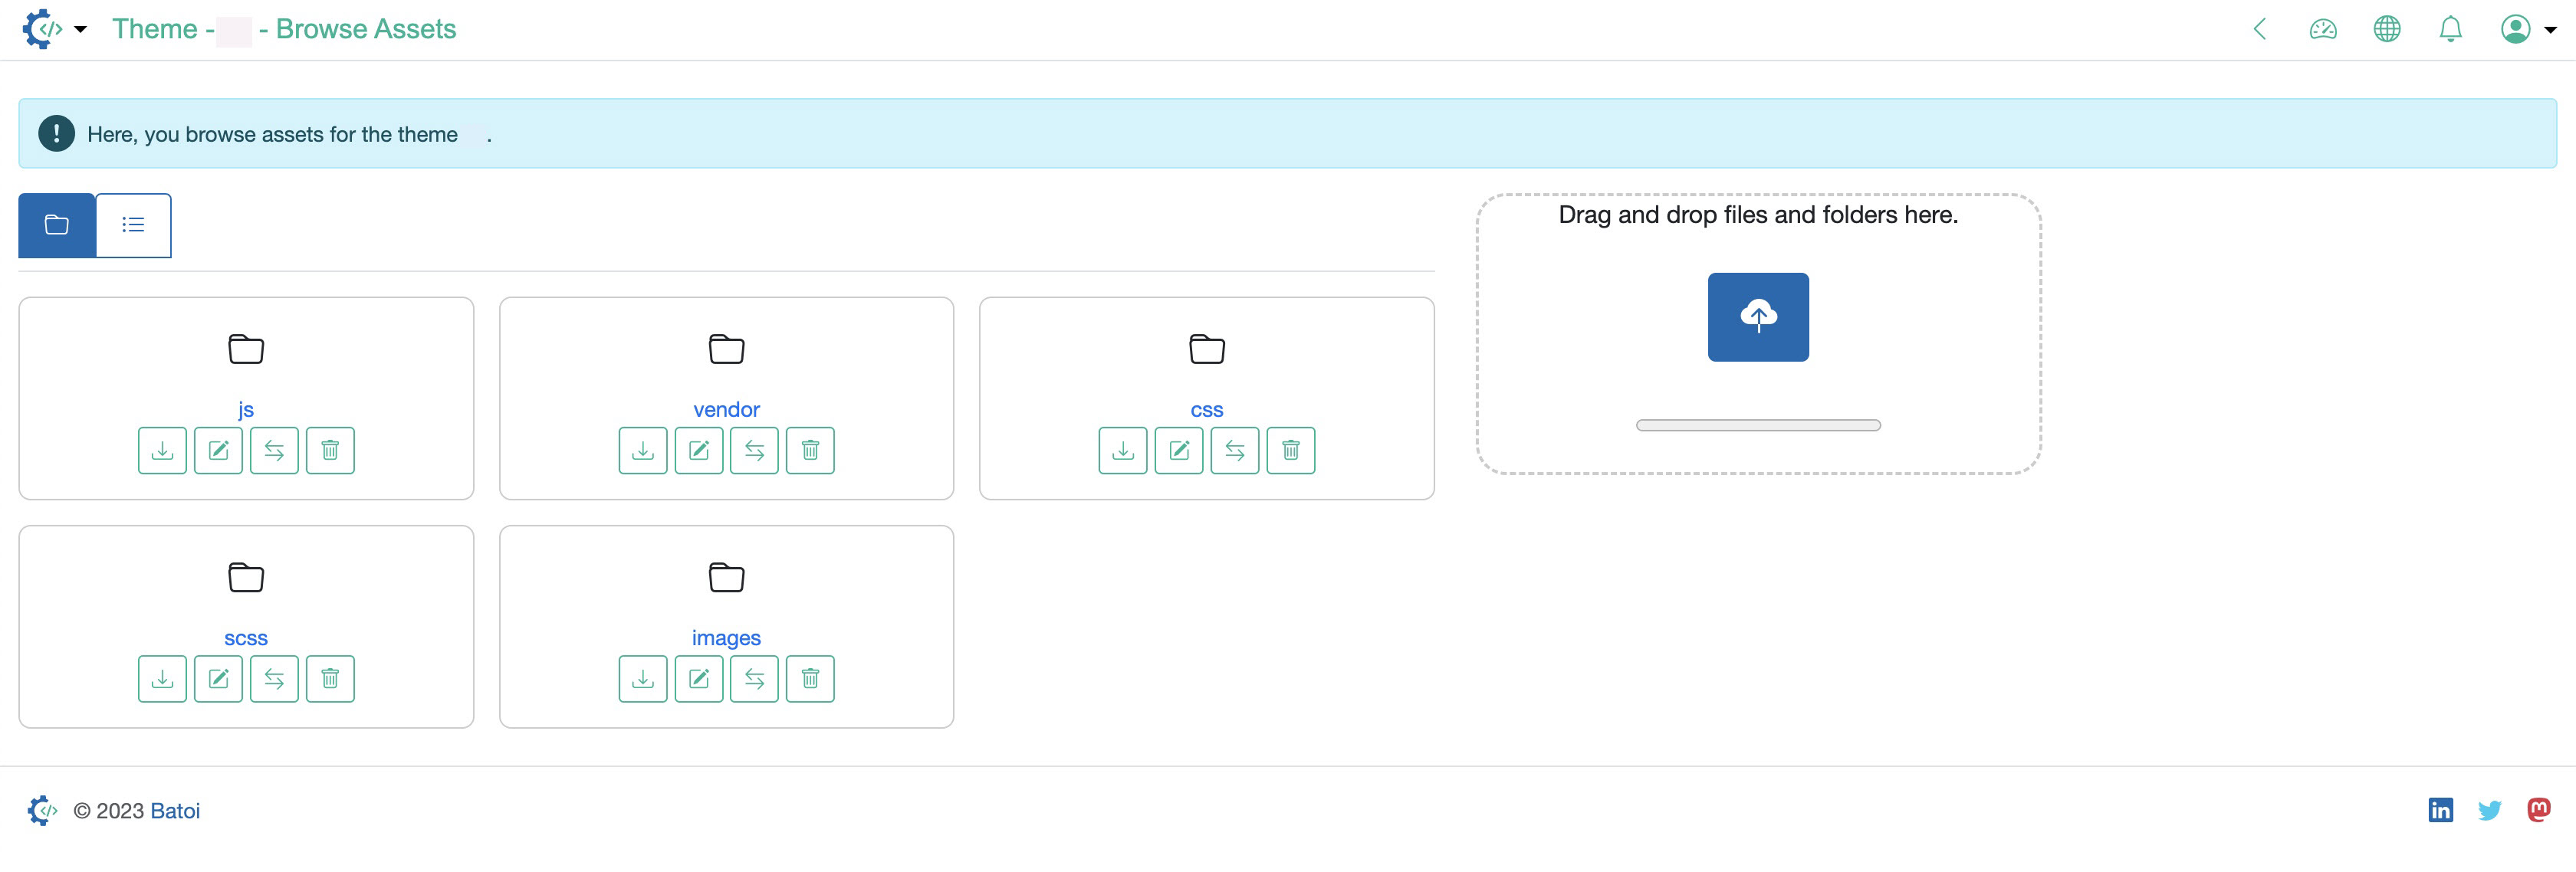 Figure 1: RAD Admin Portal Individual Theme Assets Dashboard Screen